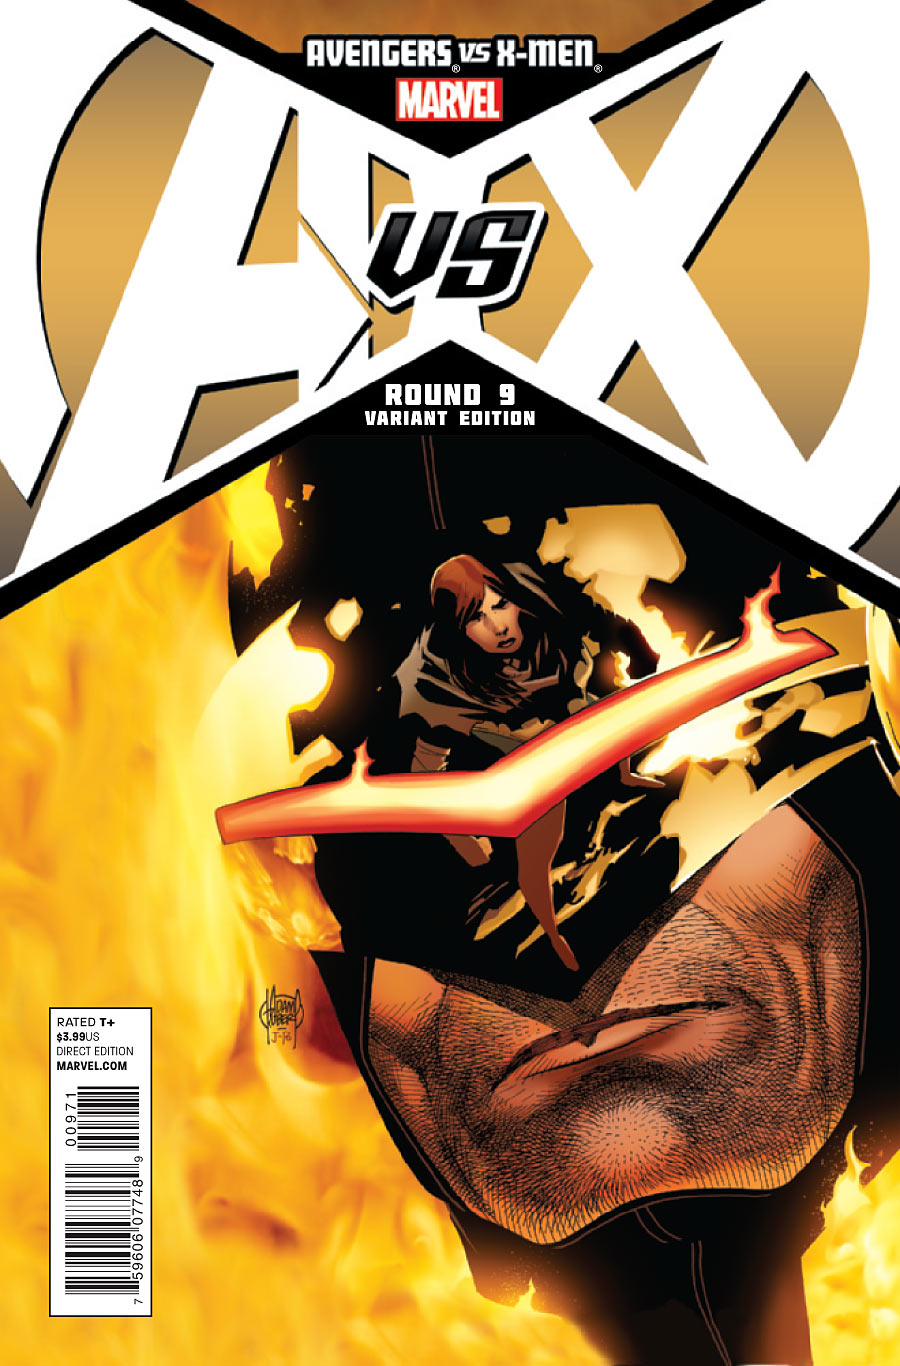 Preview de Avengers vs X-Men #9 - Vingadores - Marvel Comics - Blog Farofeiros